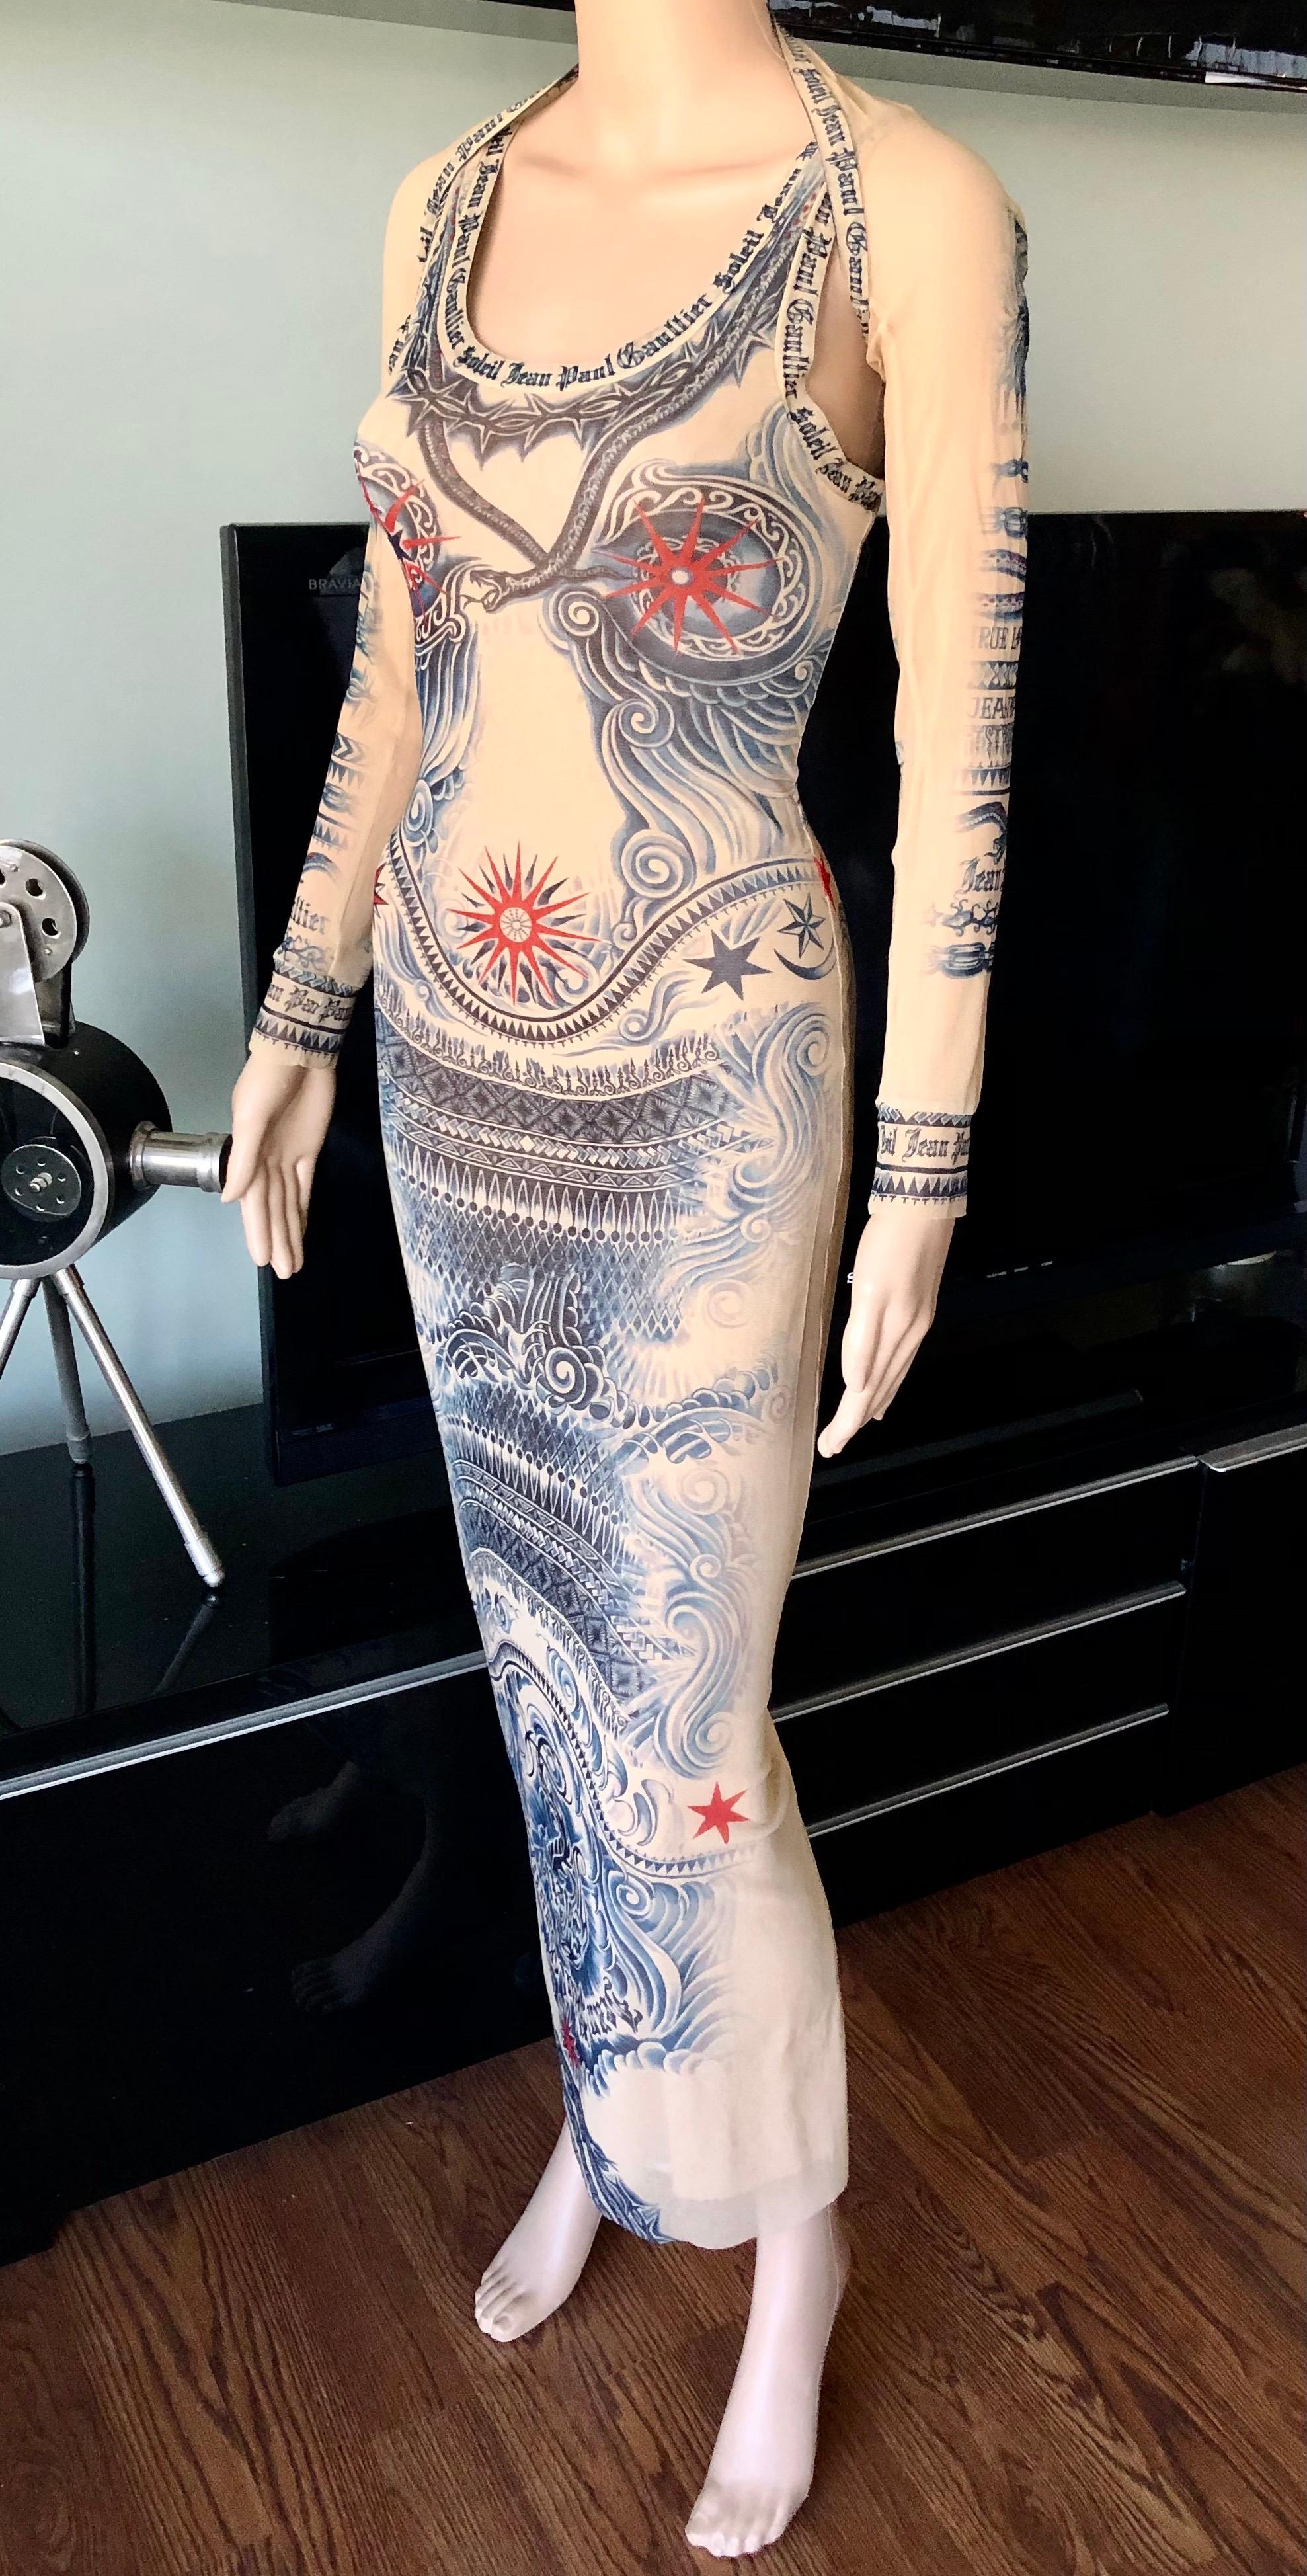 Jean Paul Gaultier Soleil Vintage Tattoo Bodycon Mesh Bolero and Maxi Dress 2 Piece Set Size S

Excellent Condition

